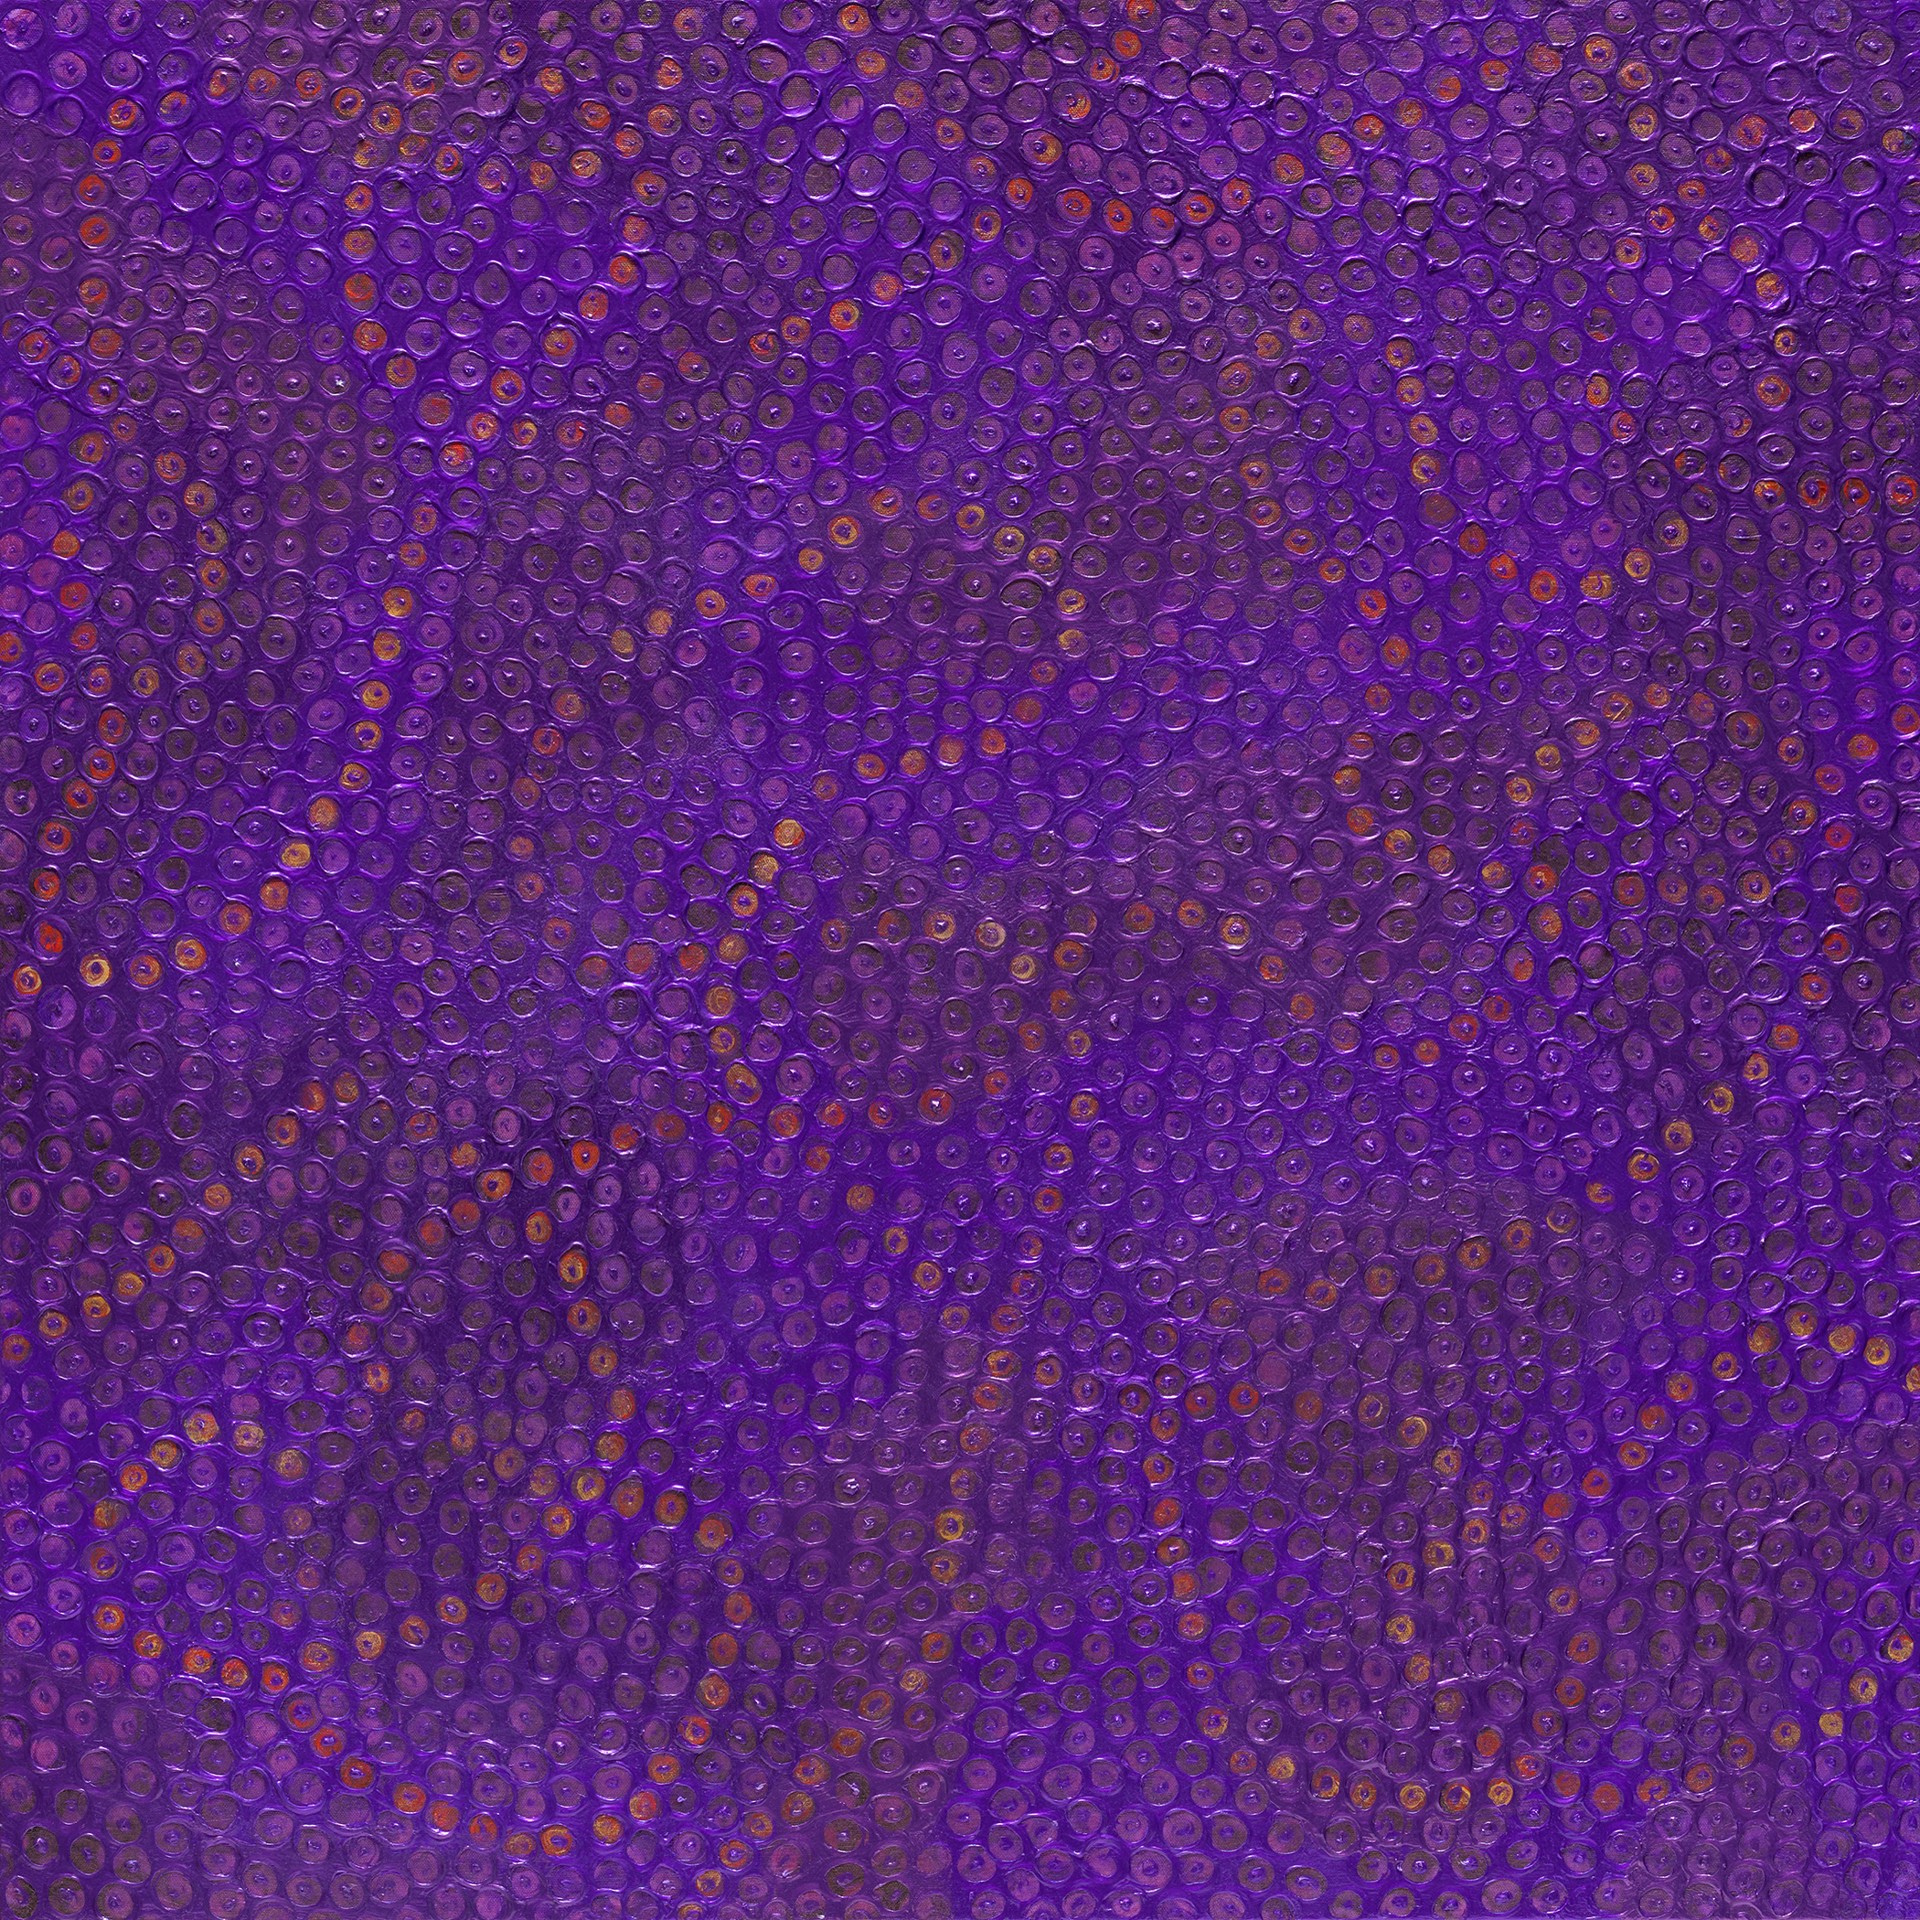 Broacades-Purple- Gold by Uma Rani Iyli